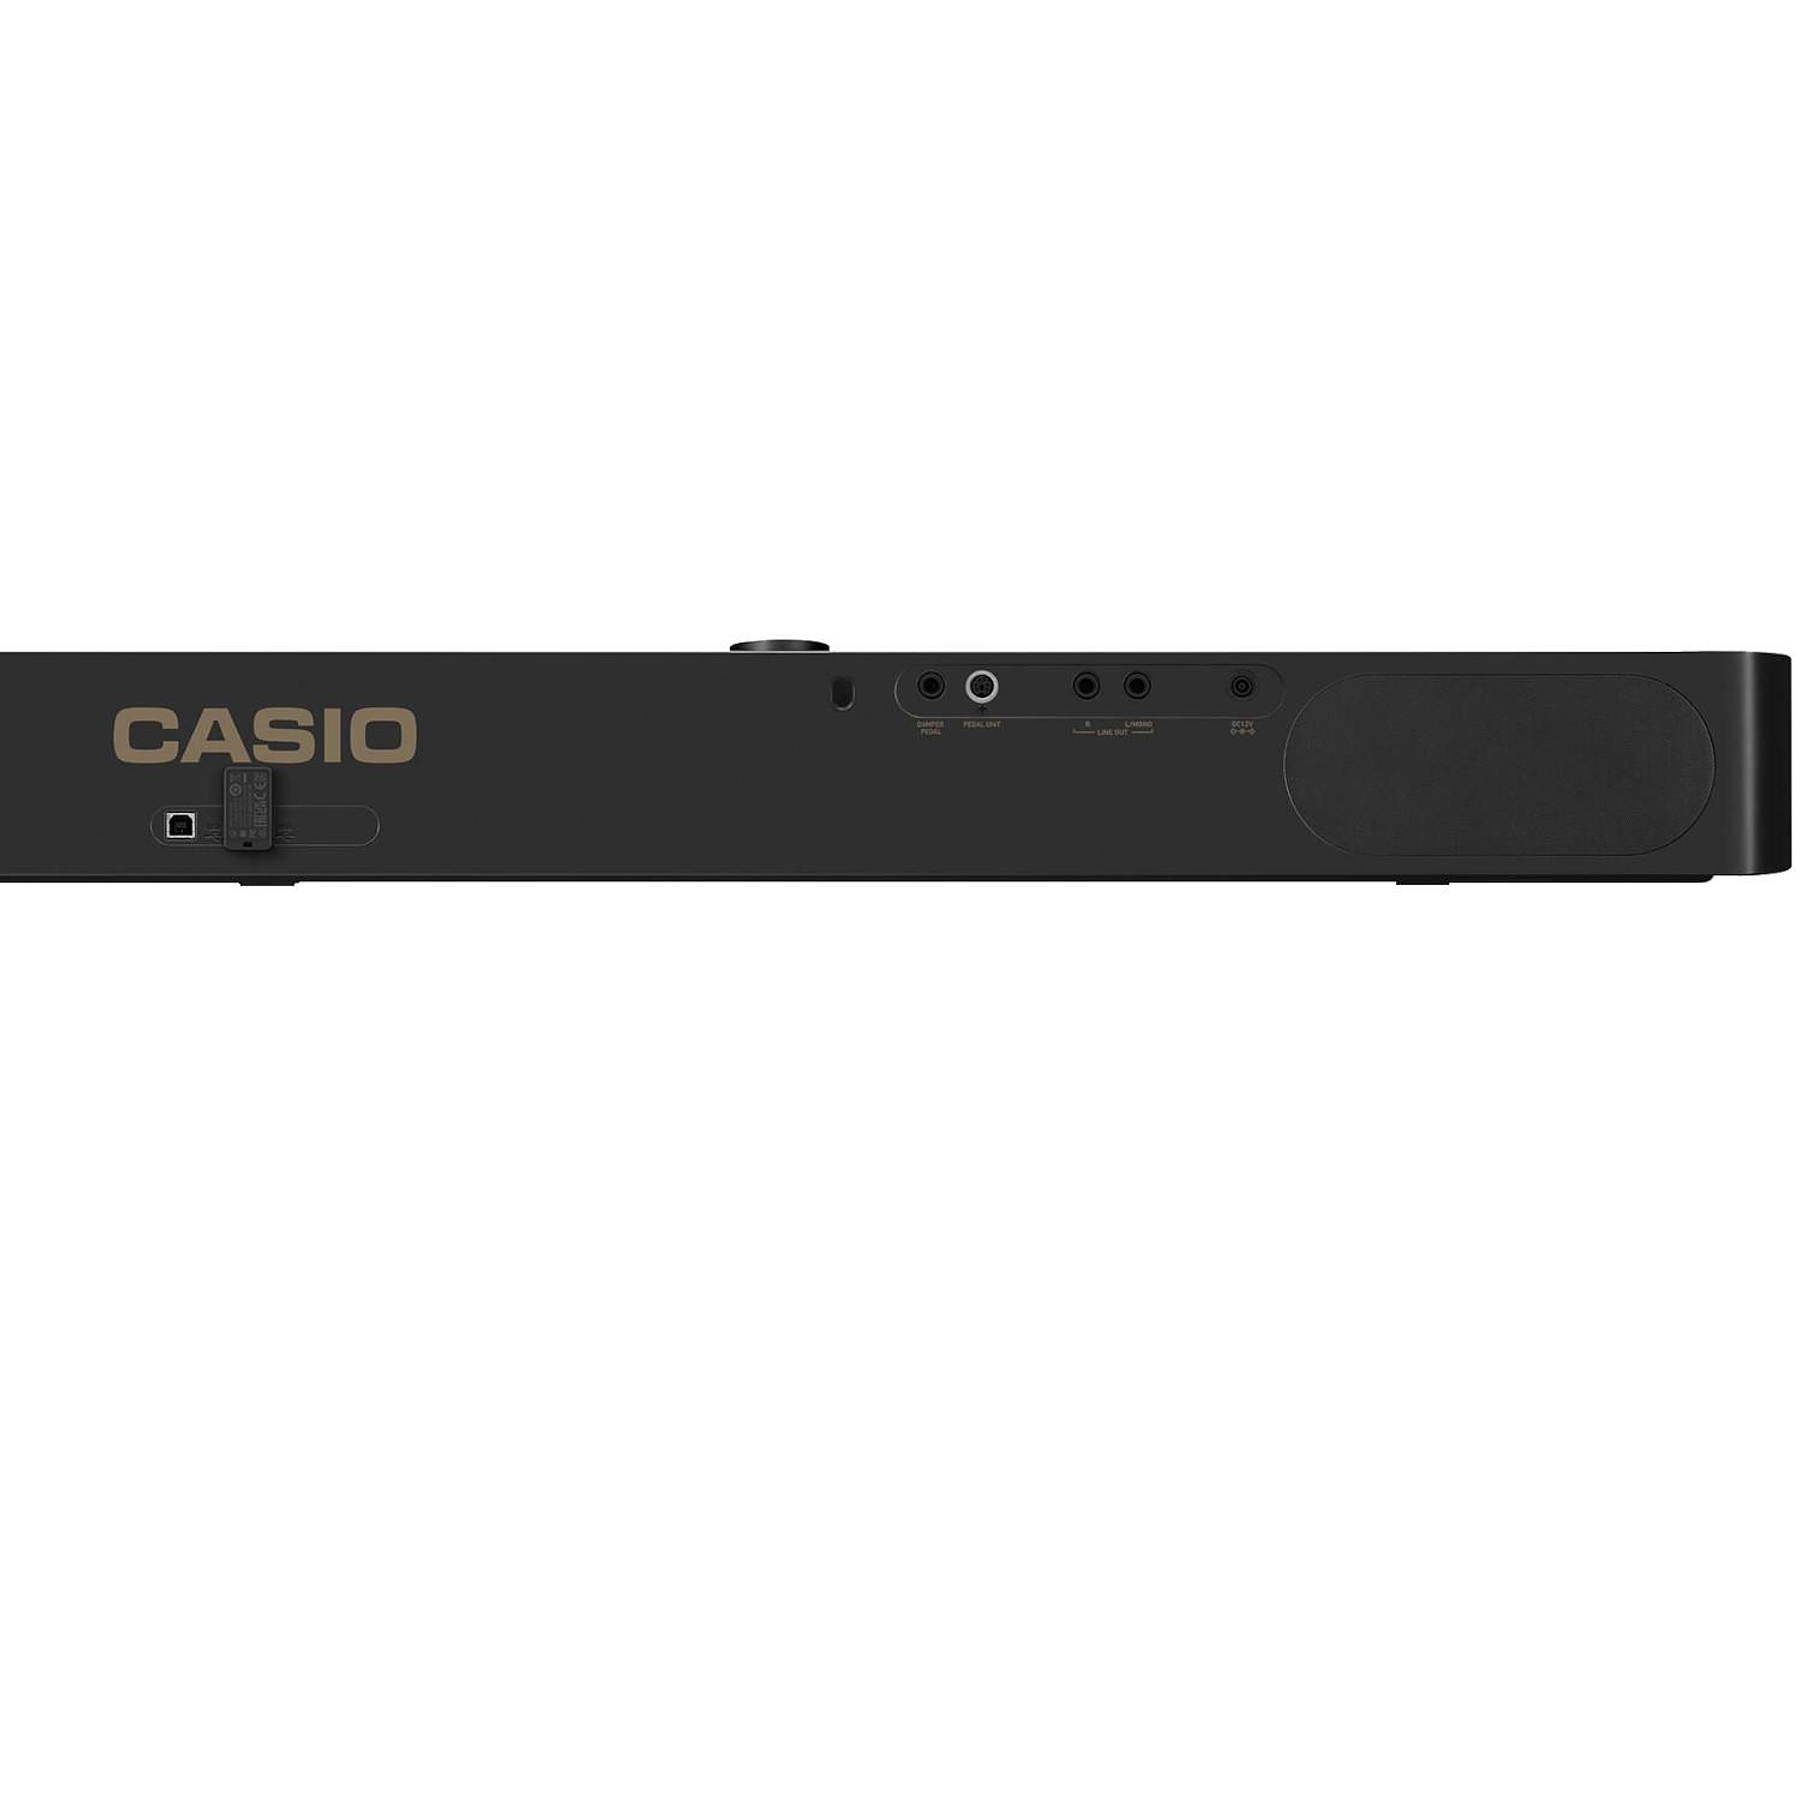 Piano Digital Casio PX-S1100 BK